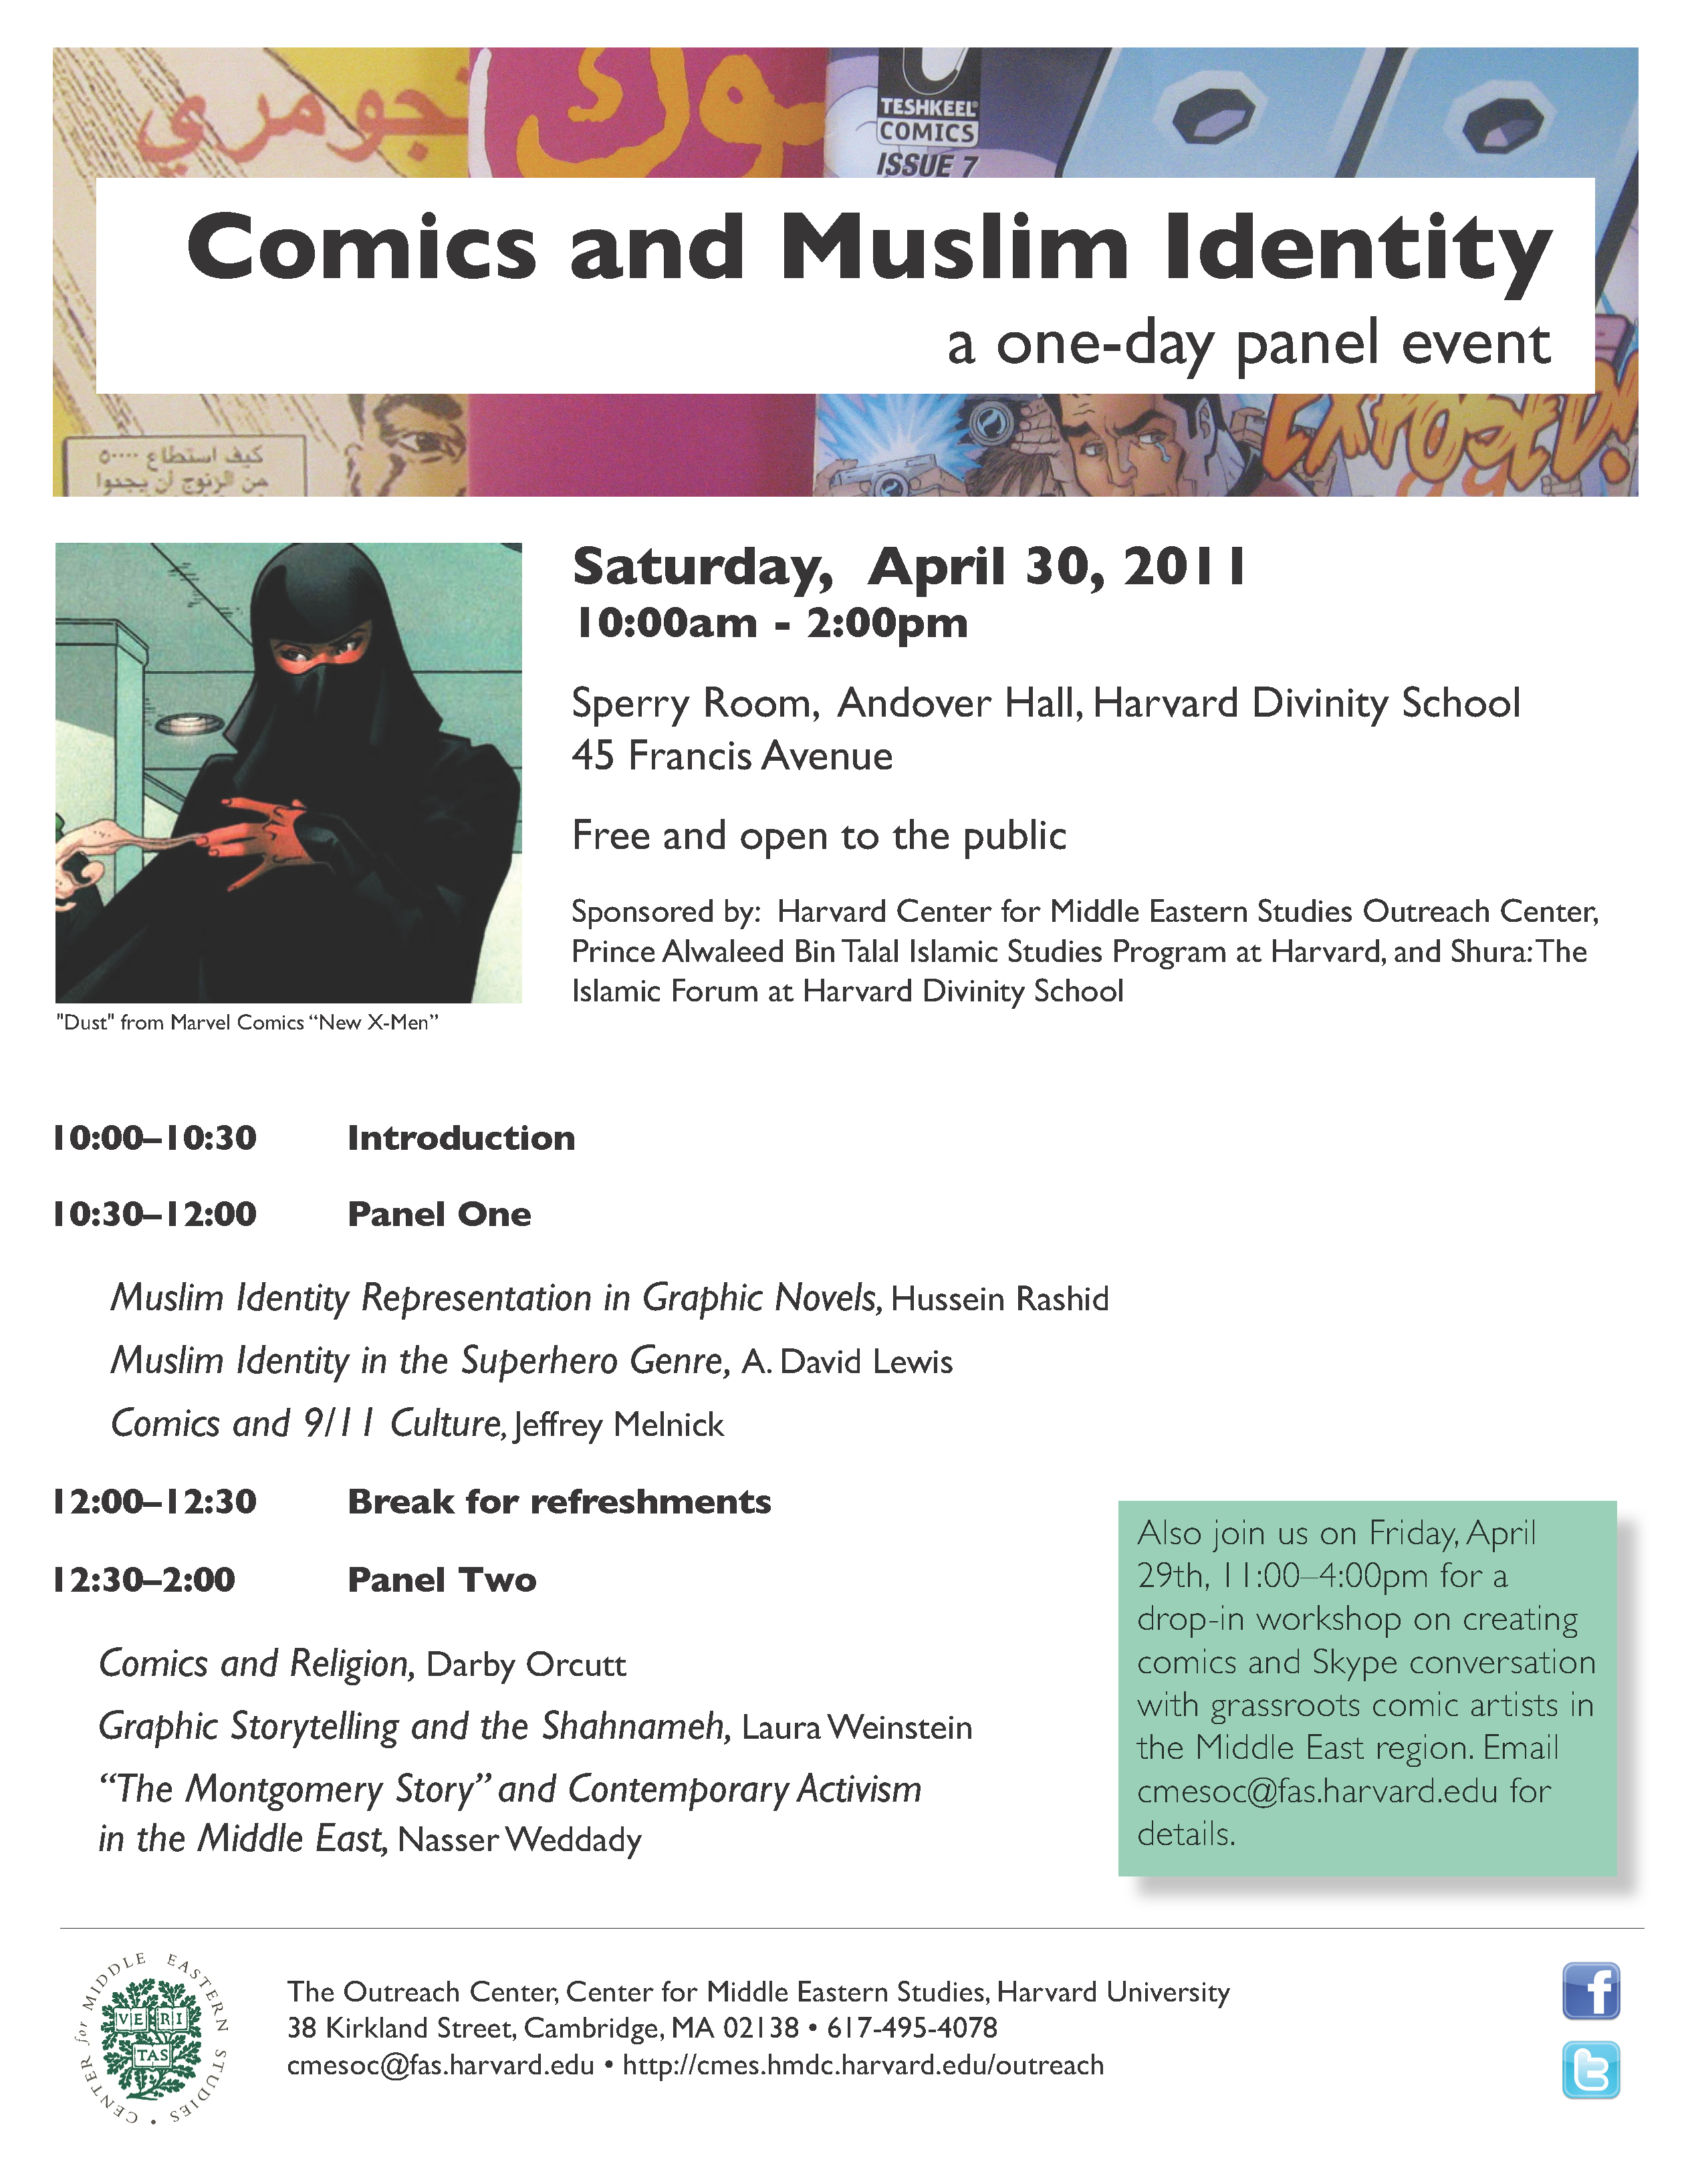 Comics and Muslim Identity at the Harvard University CMES